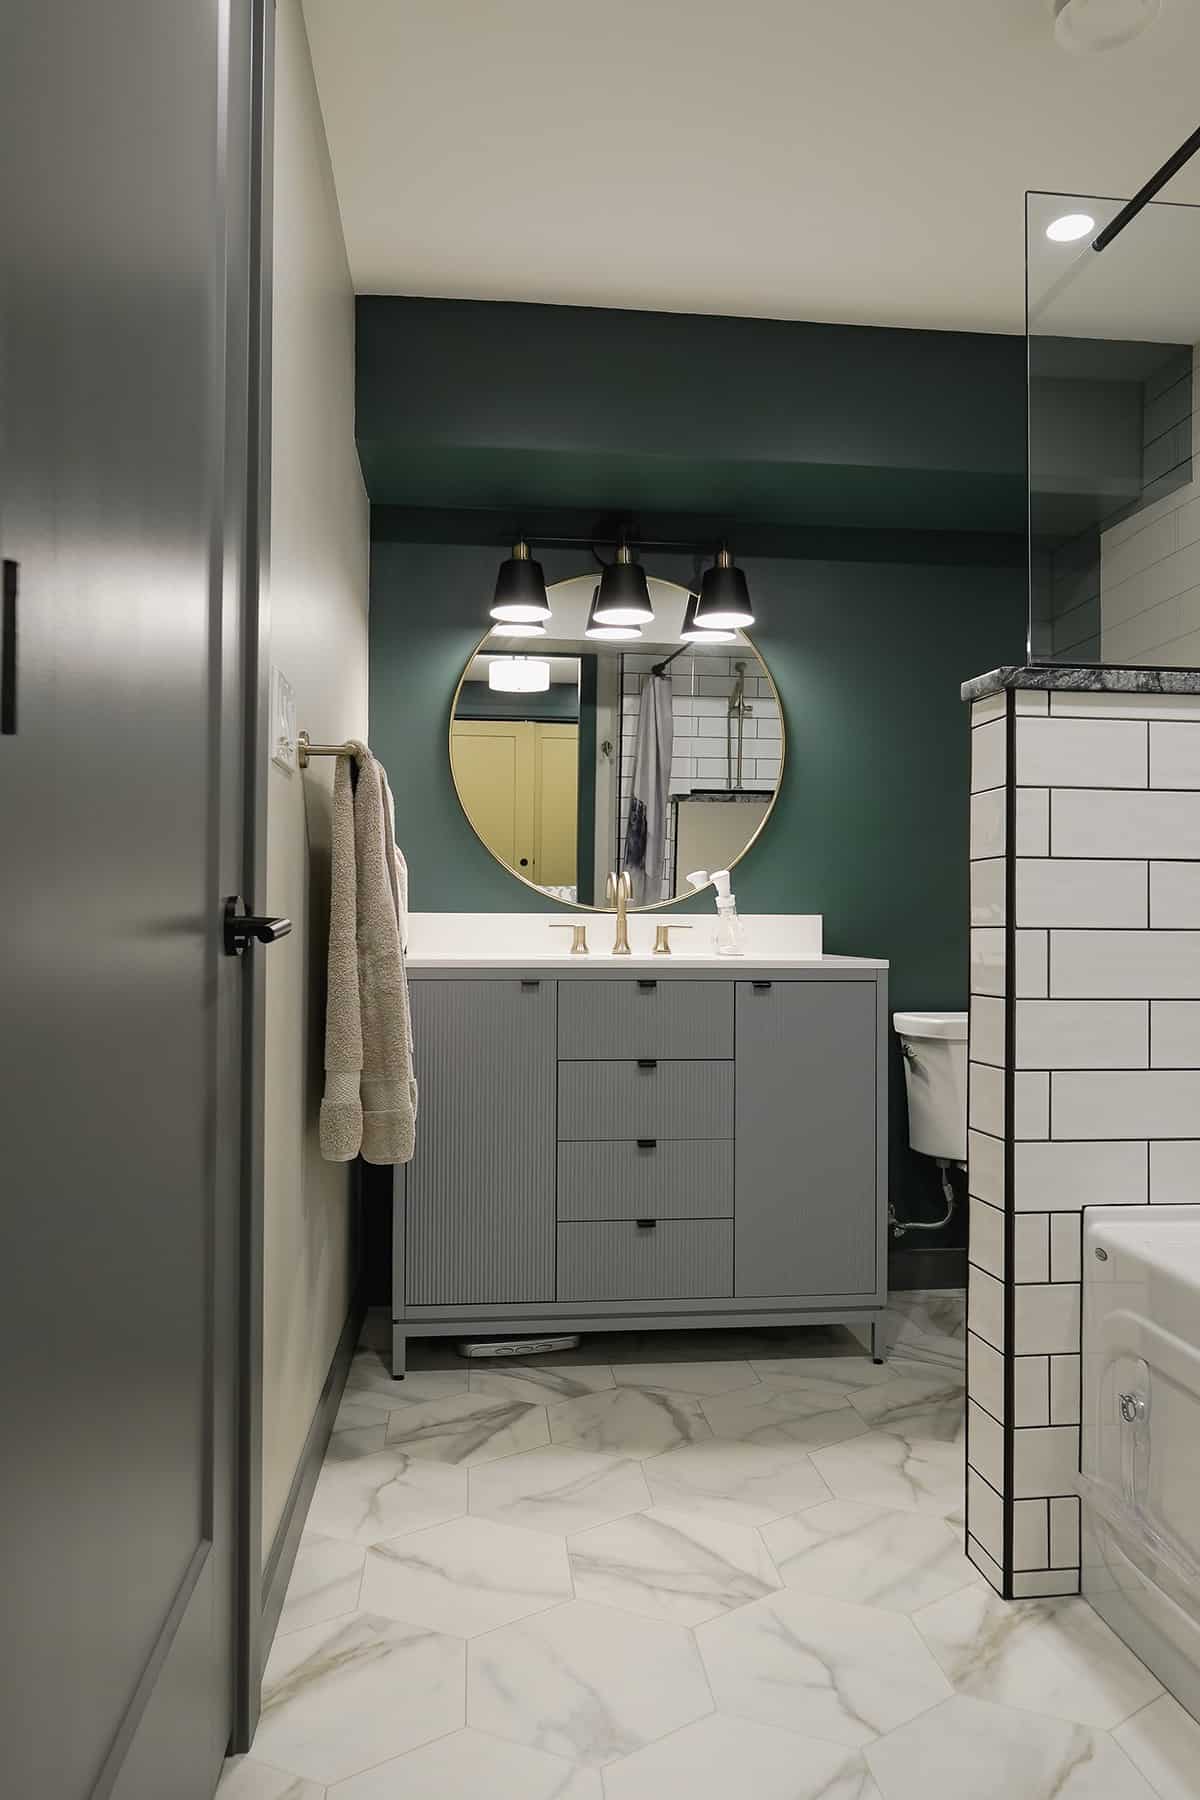 linoleum in bathroom with grey vanity and rich green walls